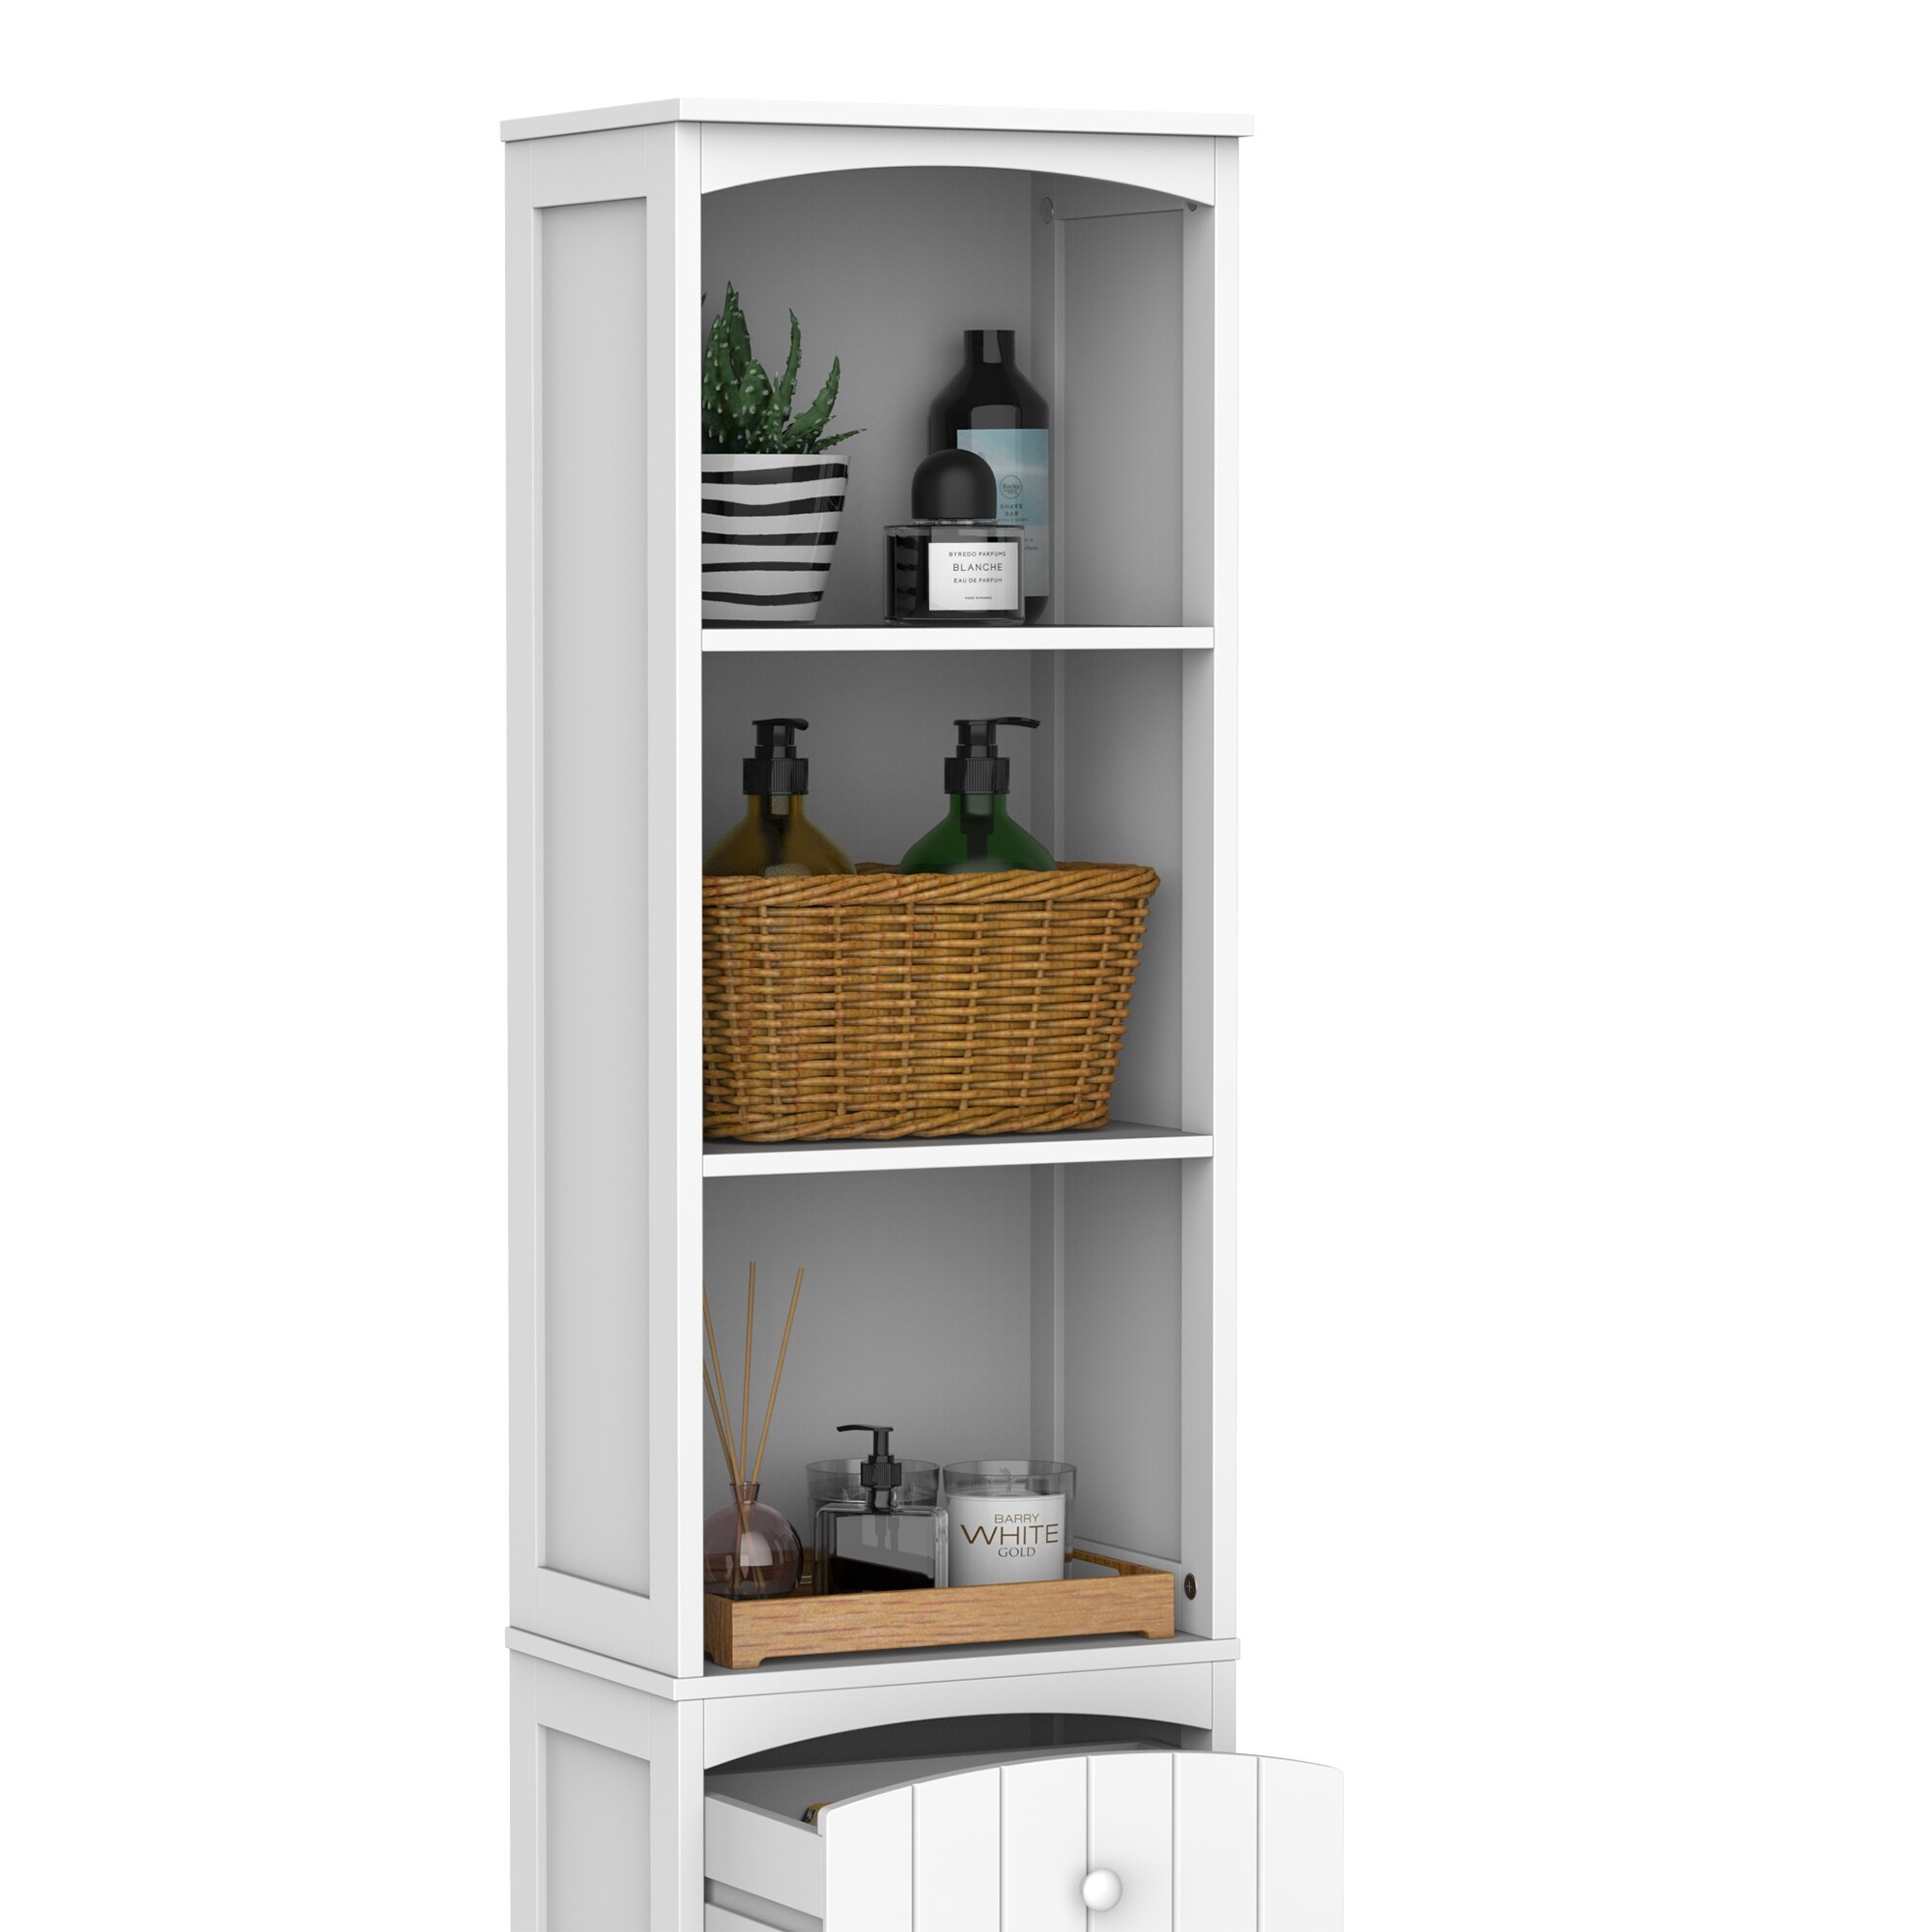 https://ak1.ostkcdn.com/images/products/is/images/direct/6c774a92b3428f1ebb3e19a4396df4fd53012749/HOMCOM-67%22-Tall-Bathroom-Storage-Cabinet%2C-Freestanding-Linen-Tower-with-3-Tier-Shelf%2C-Narrow-Side-Floor-Organizer%2C-White.jpg